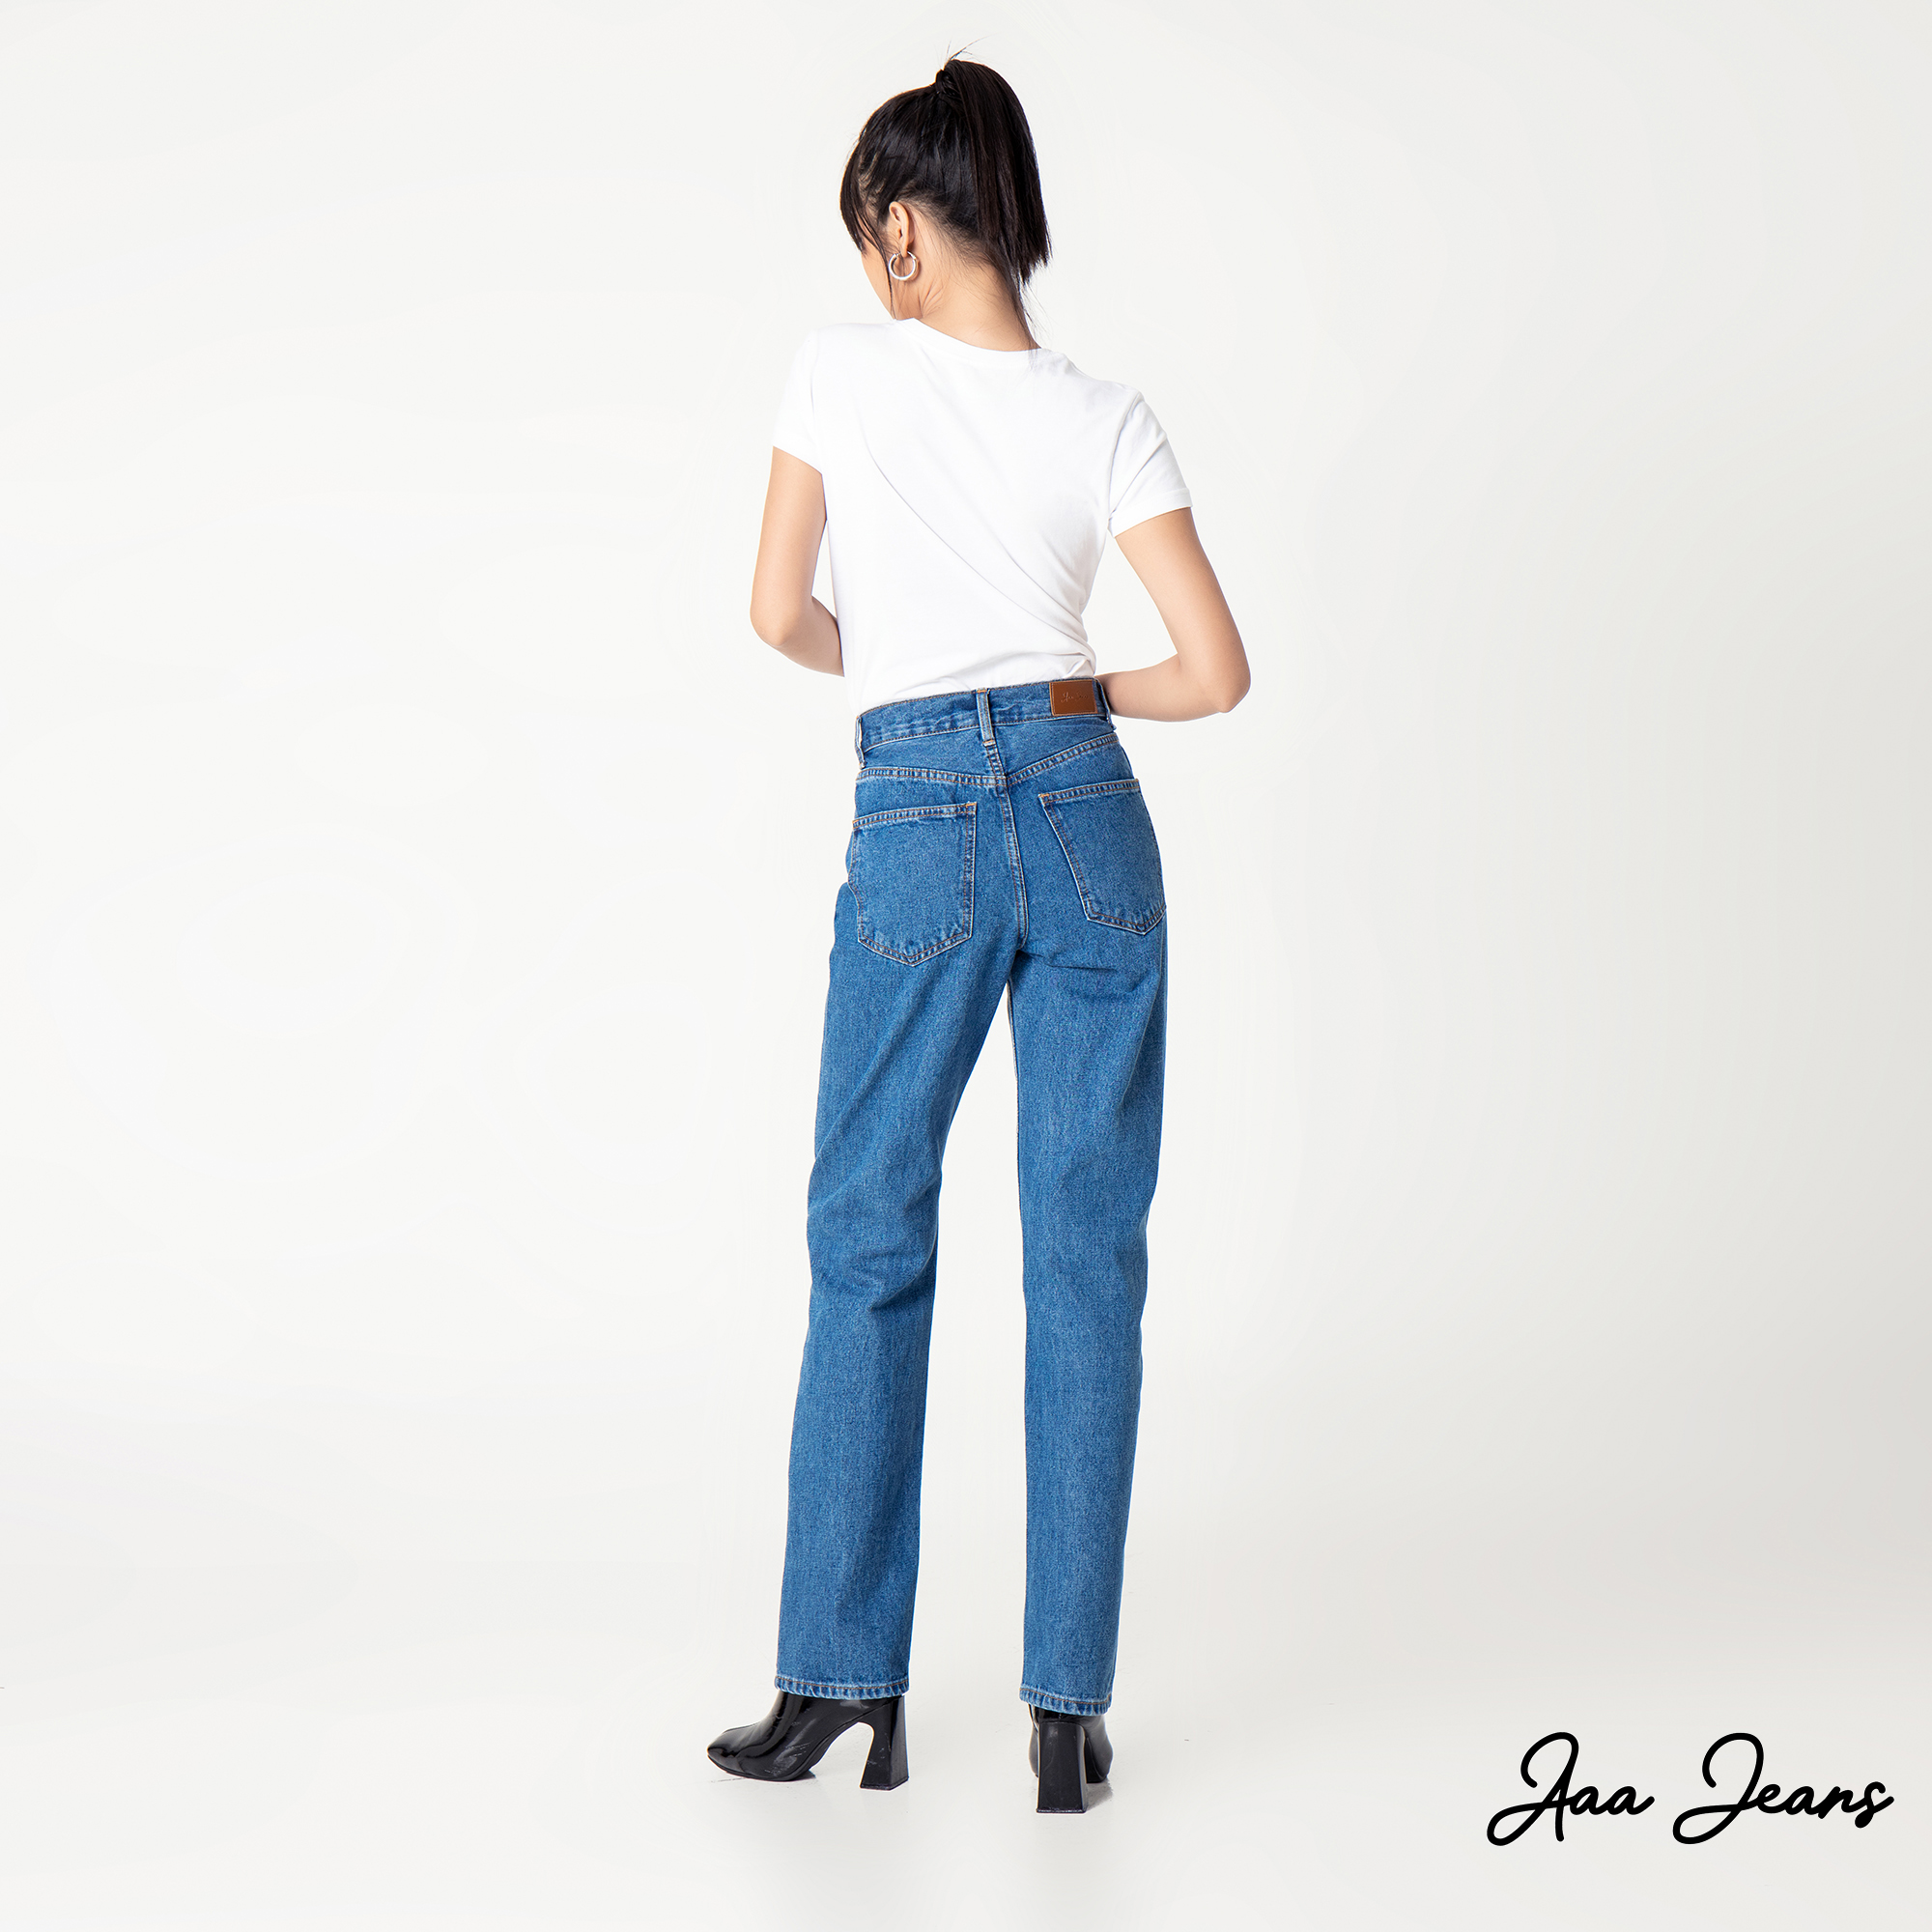 Quần jeans nữ ống đứng slim fit lưng cao Aaa Jeans